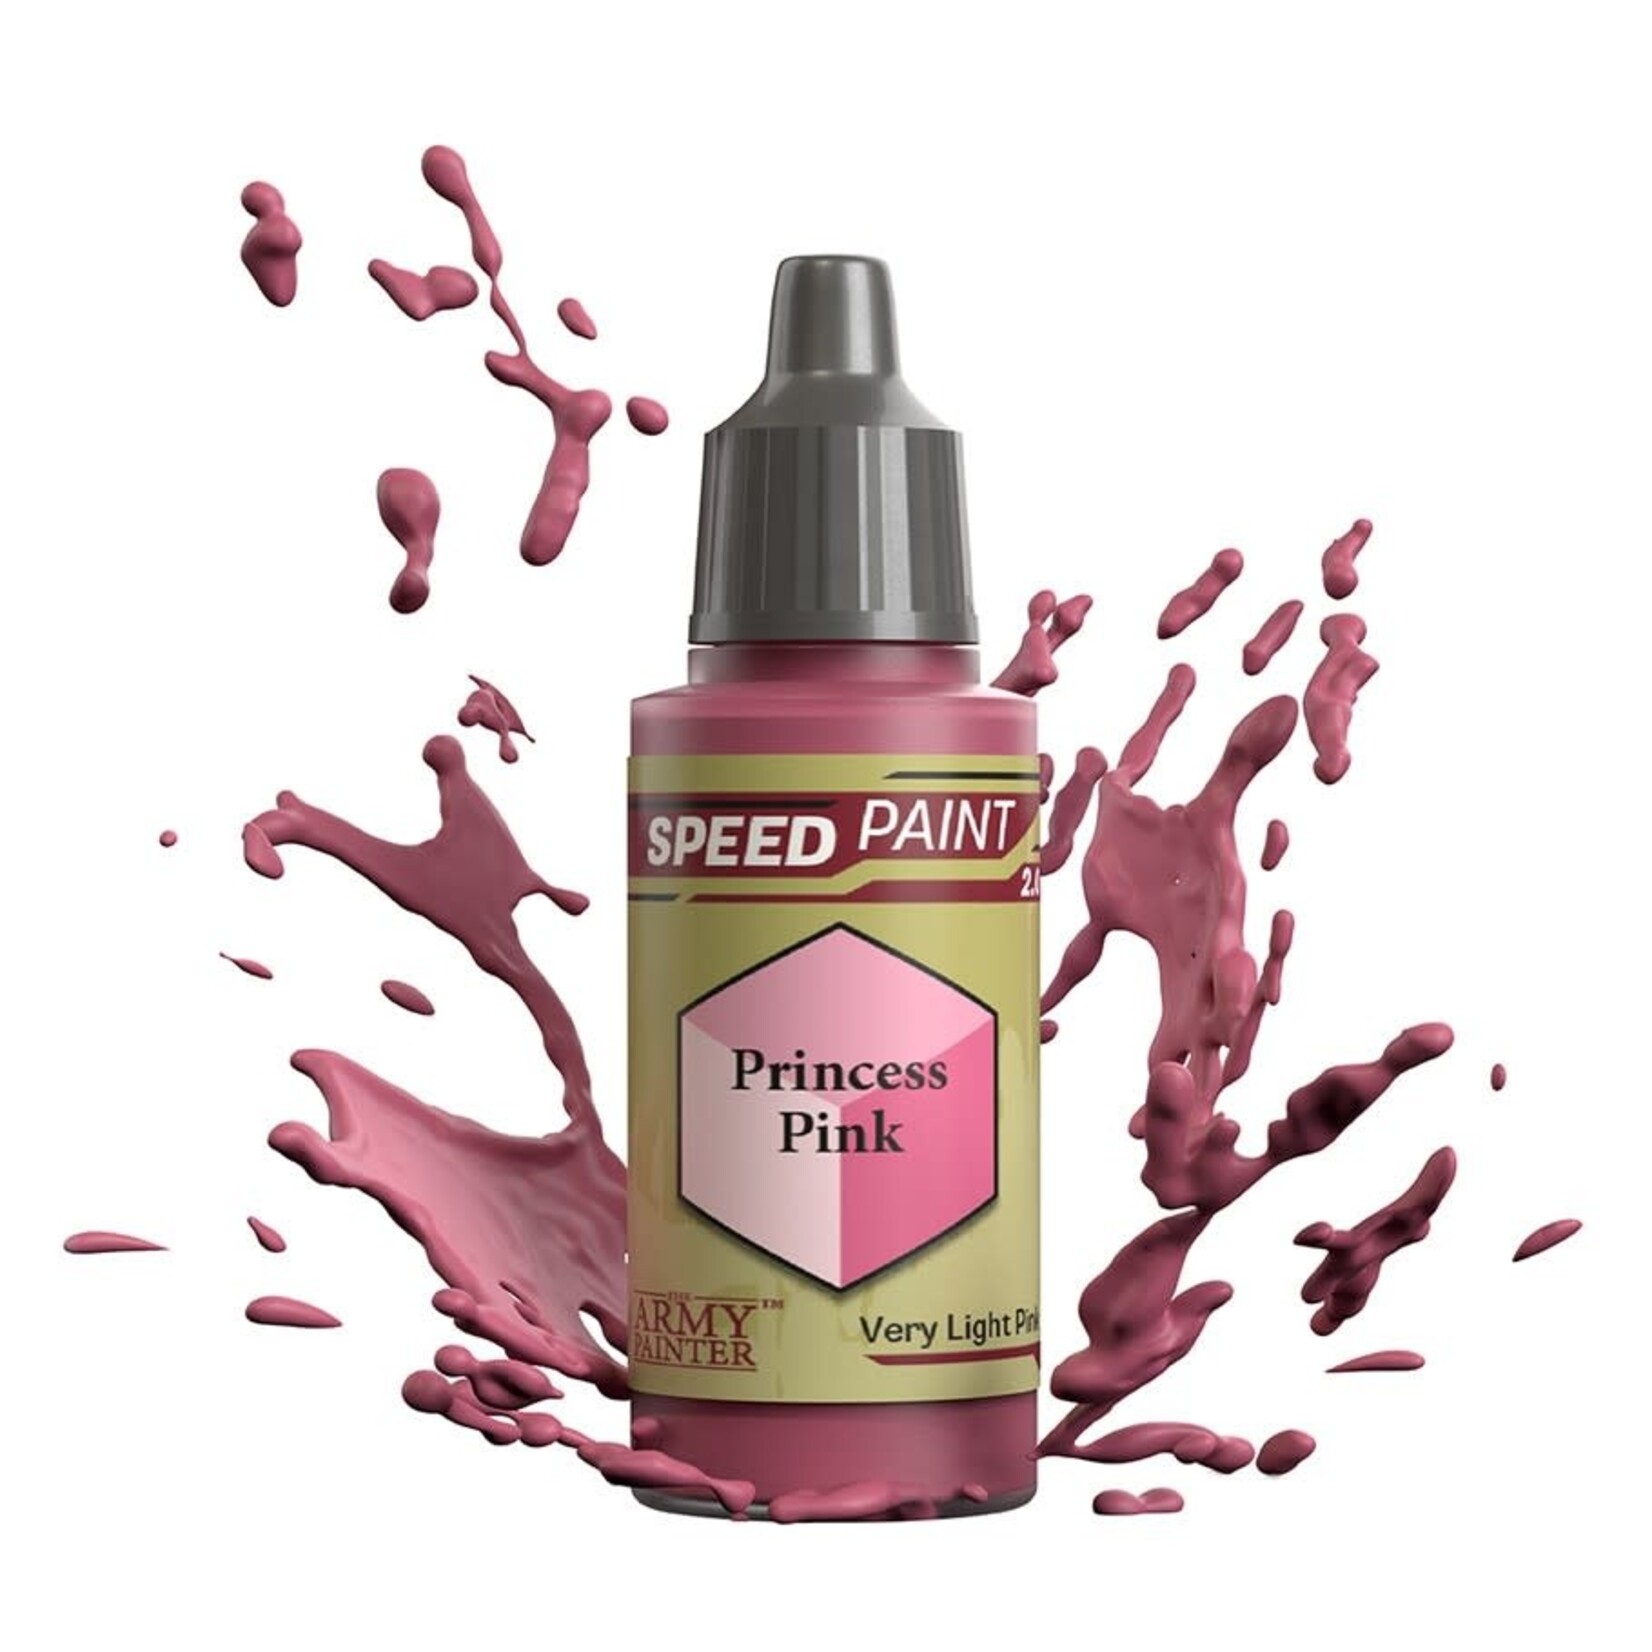 The Army Painter Speedpaint: Princess Pink